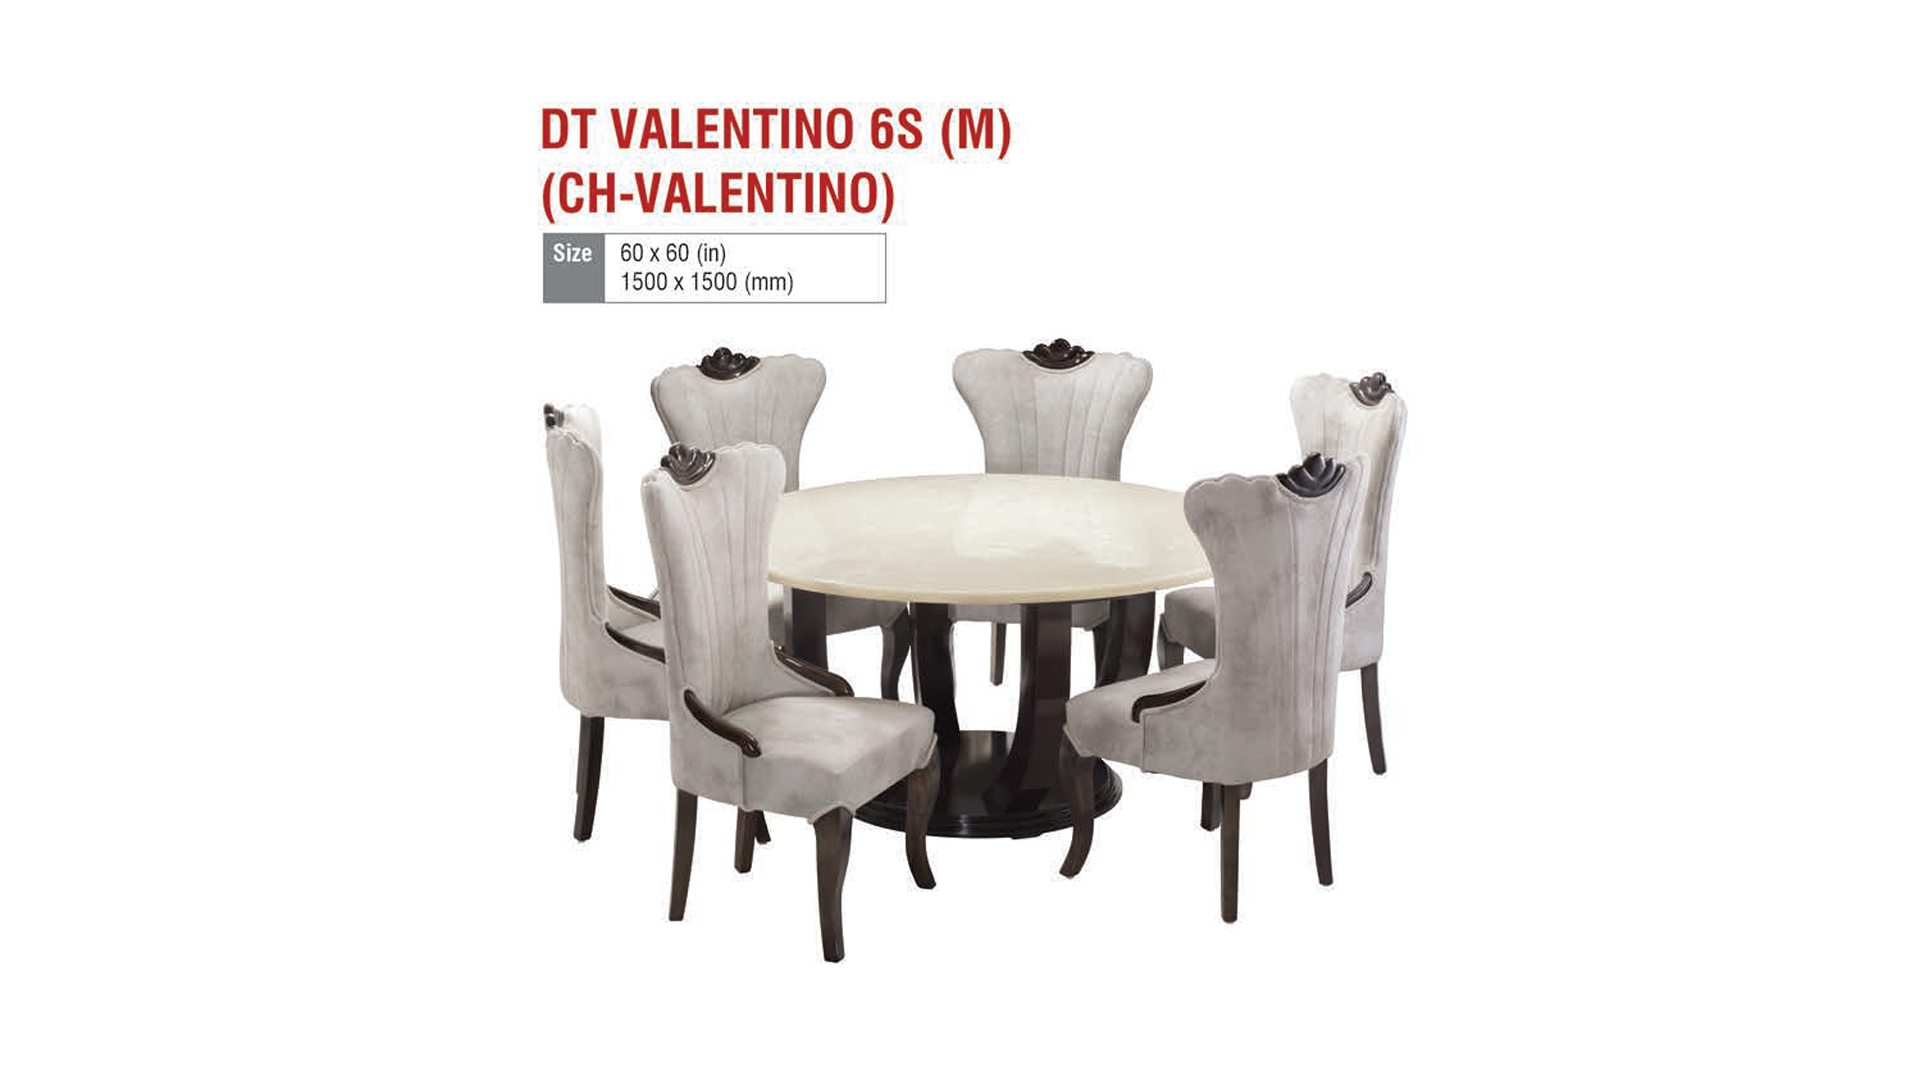 DT VALENTINO 6S (M) (CH-VALENTINO)